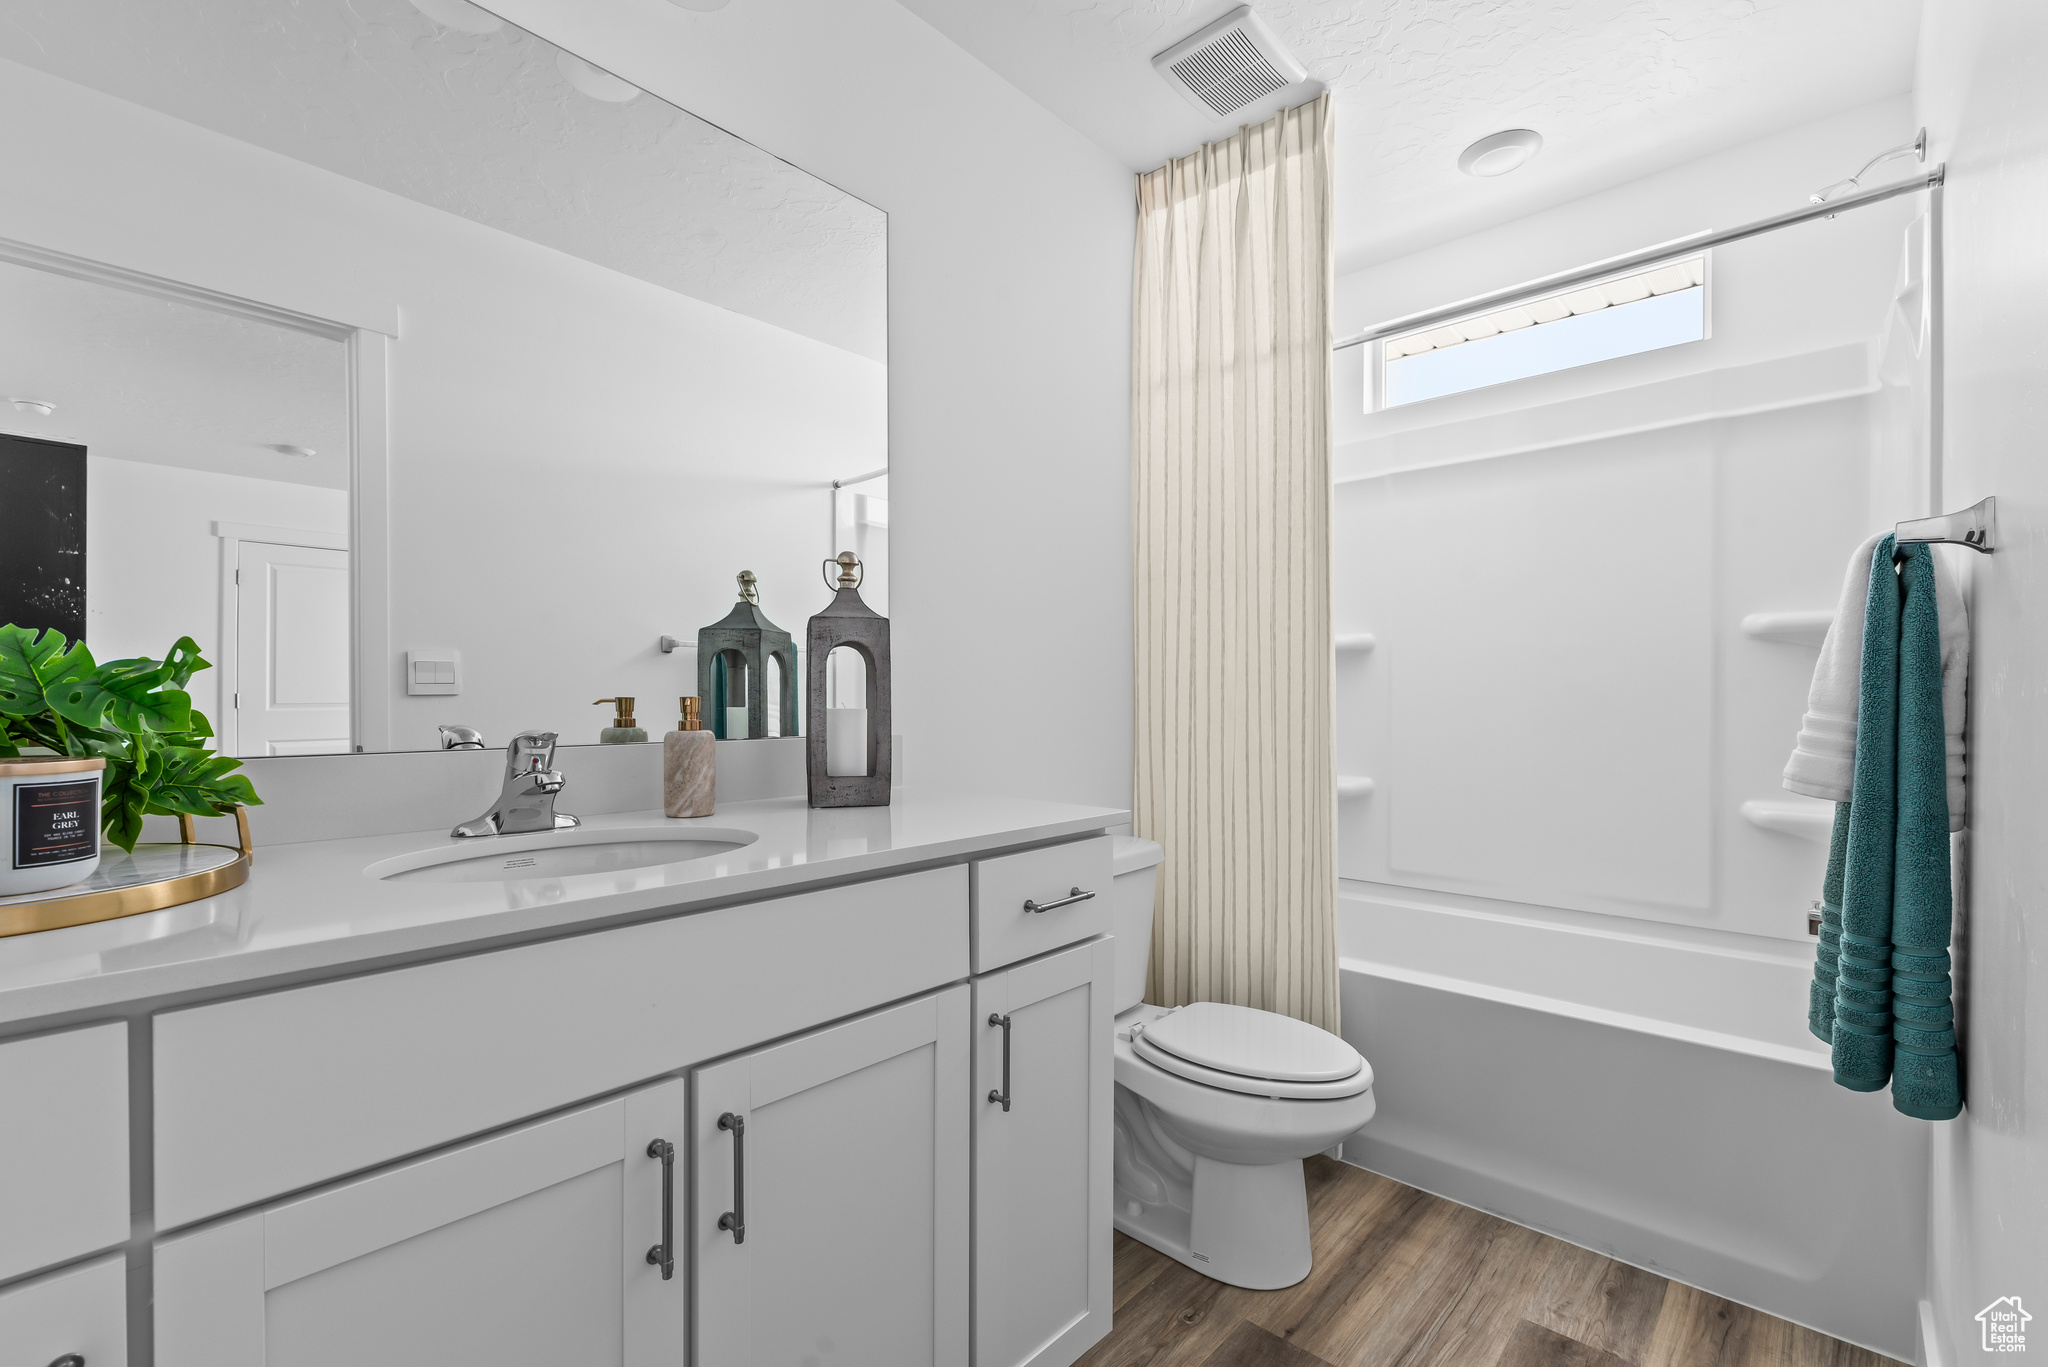 Full bathroom with hardwood / wood-style floors, vanity, toilet, and shower / tub combination